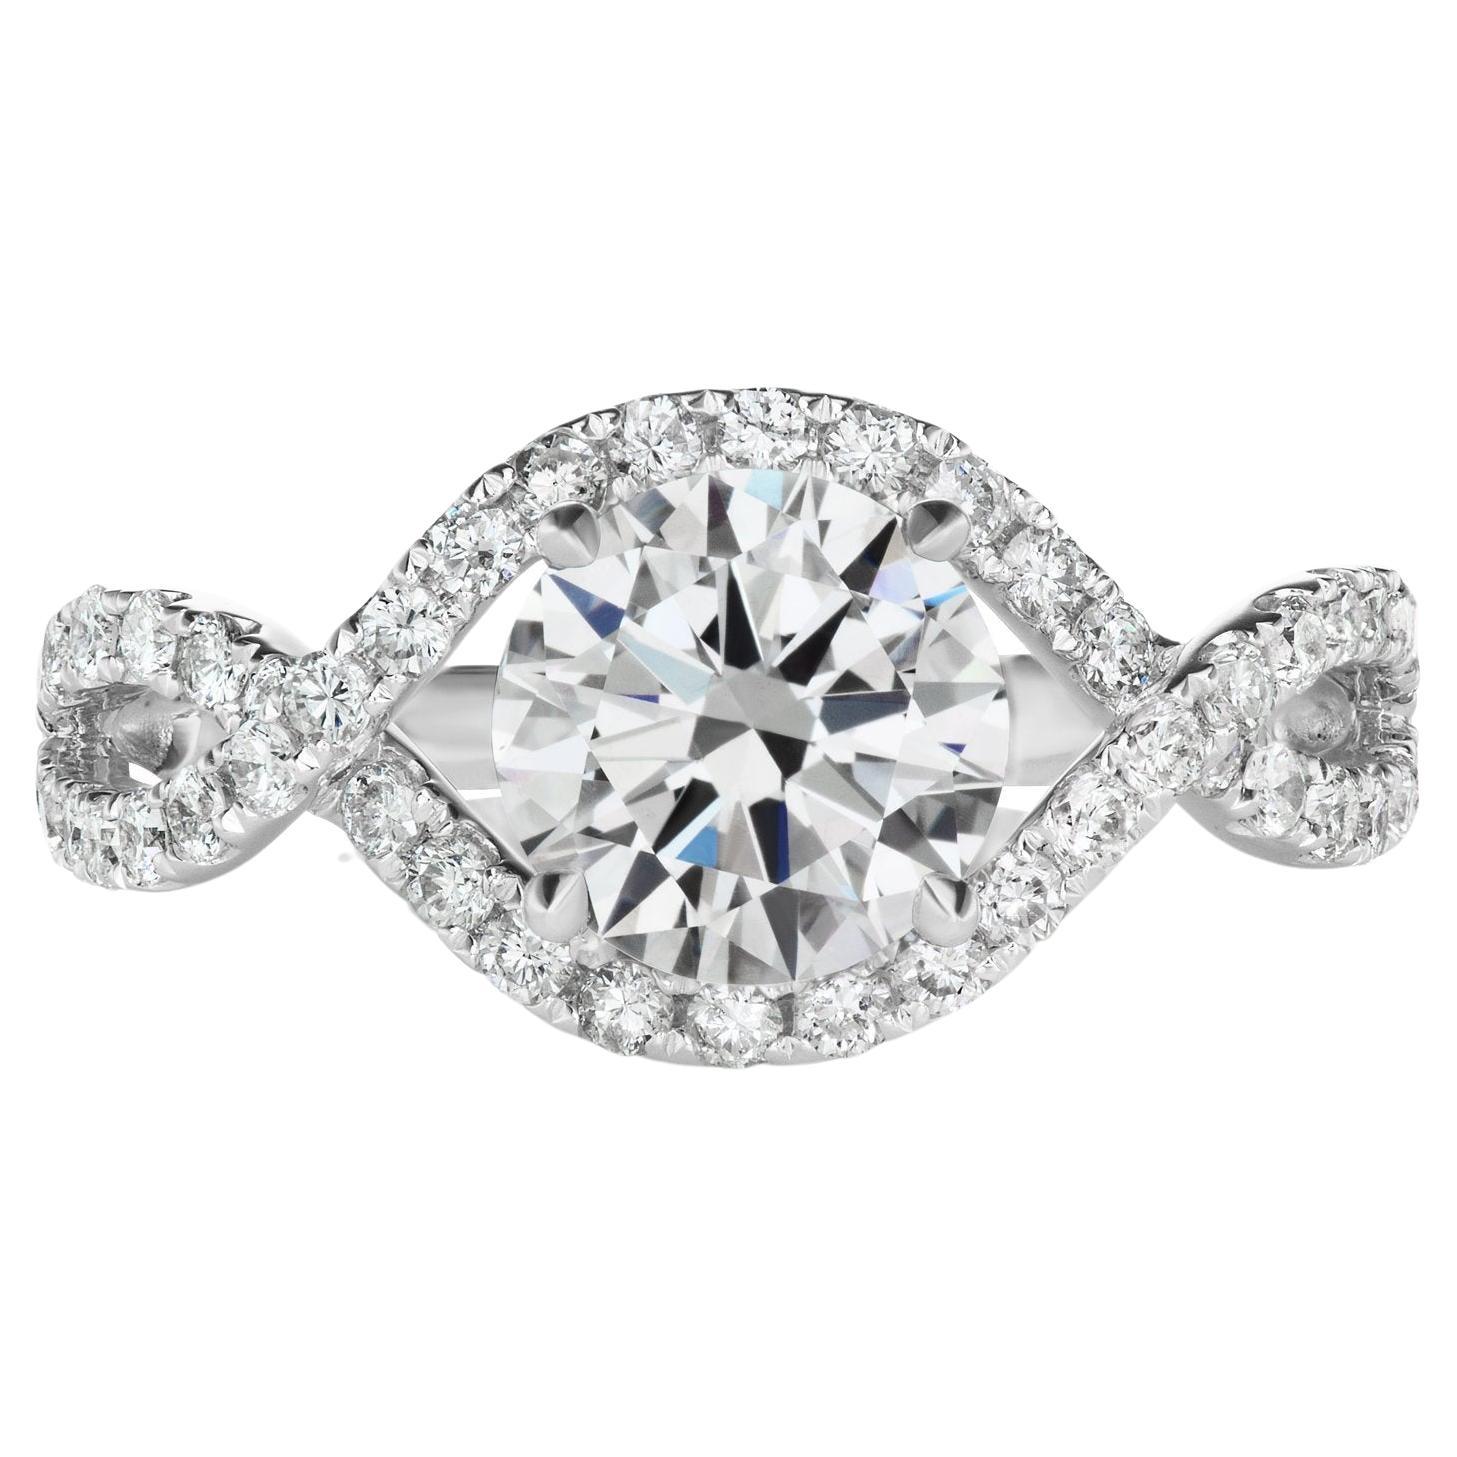 2 Carat Round Cut Diamond Engagement Ring EGL Certified F VVS